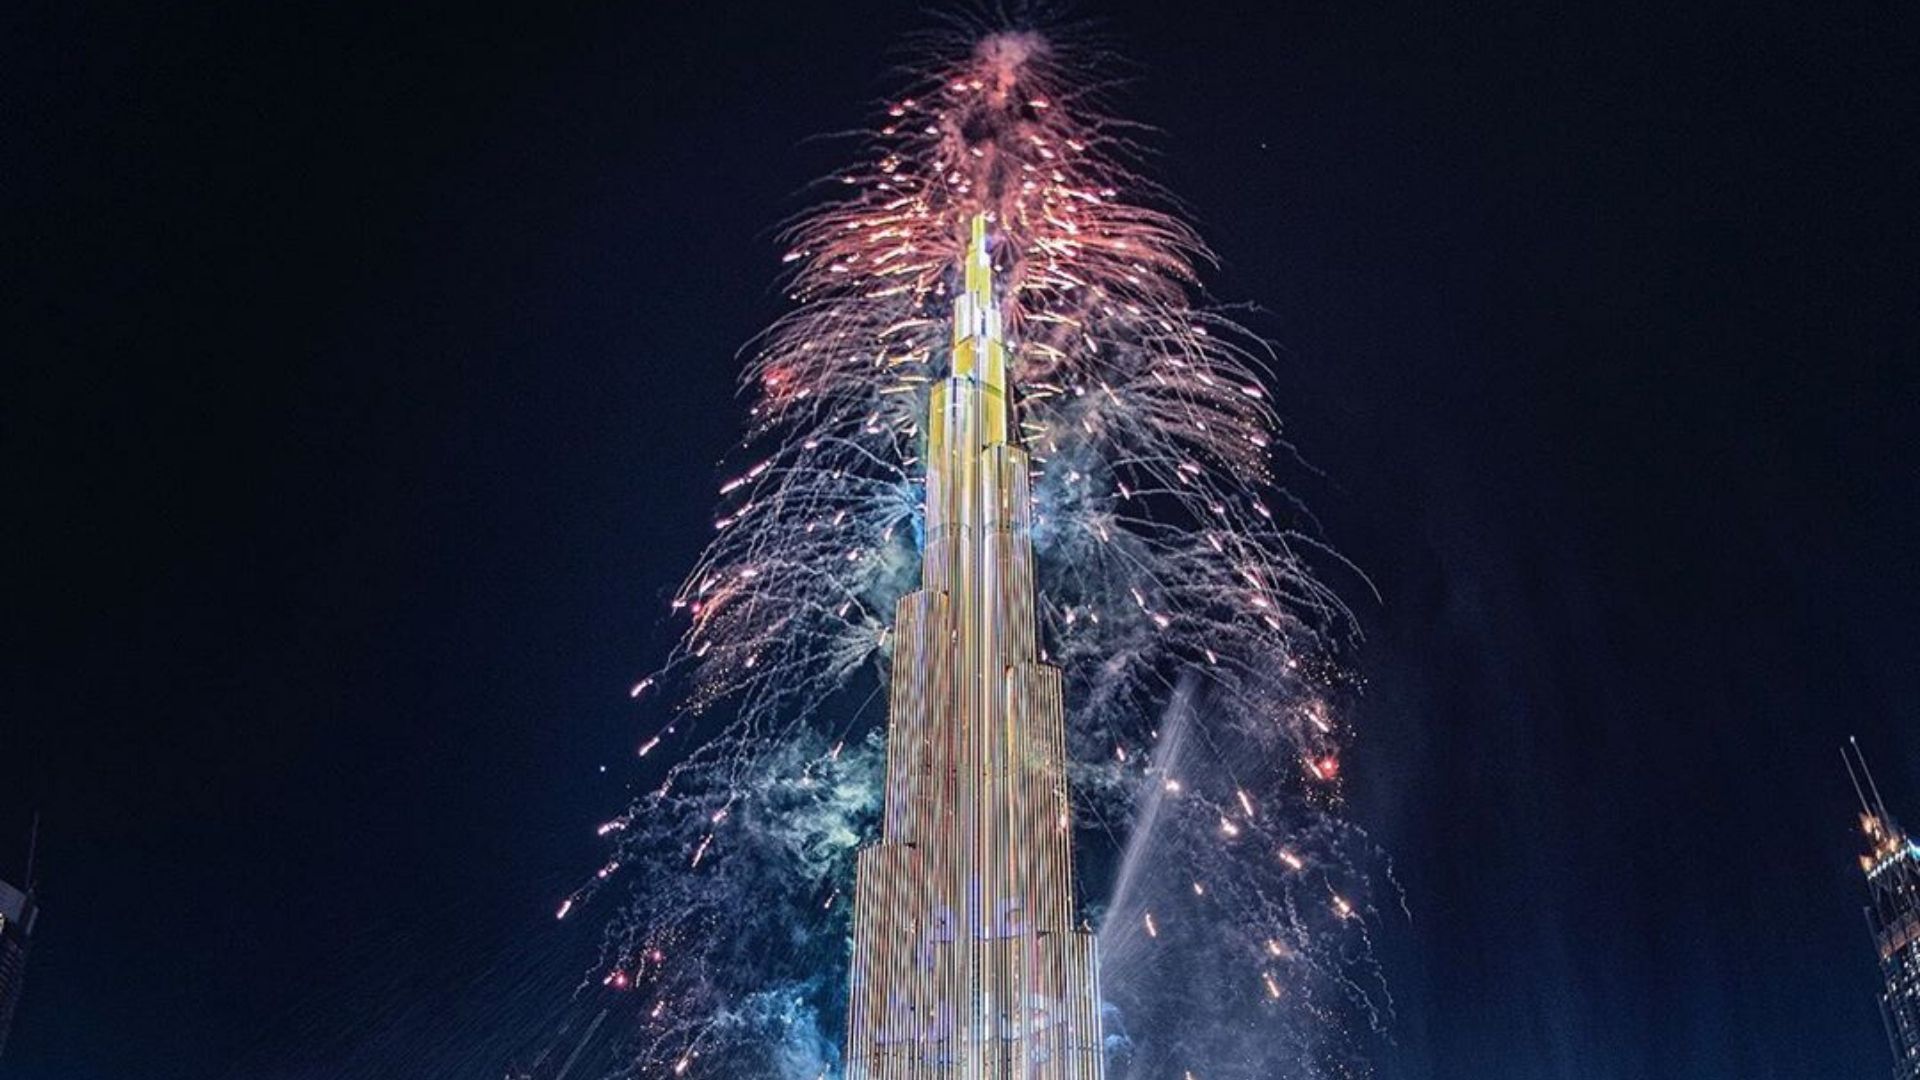 Dubai's Burj Khalifa Rang In 2020 With a Spectacular Fireworks Display